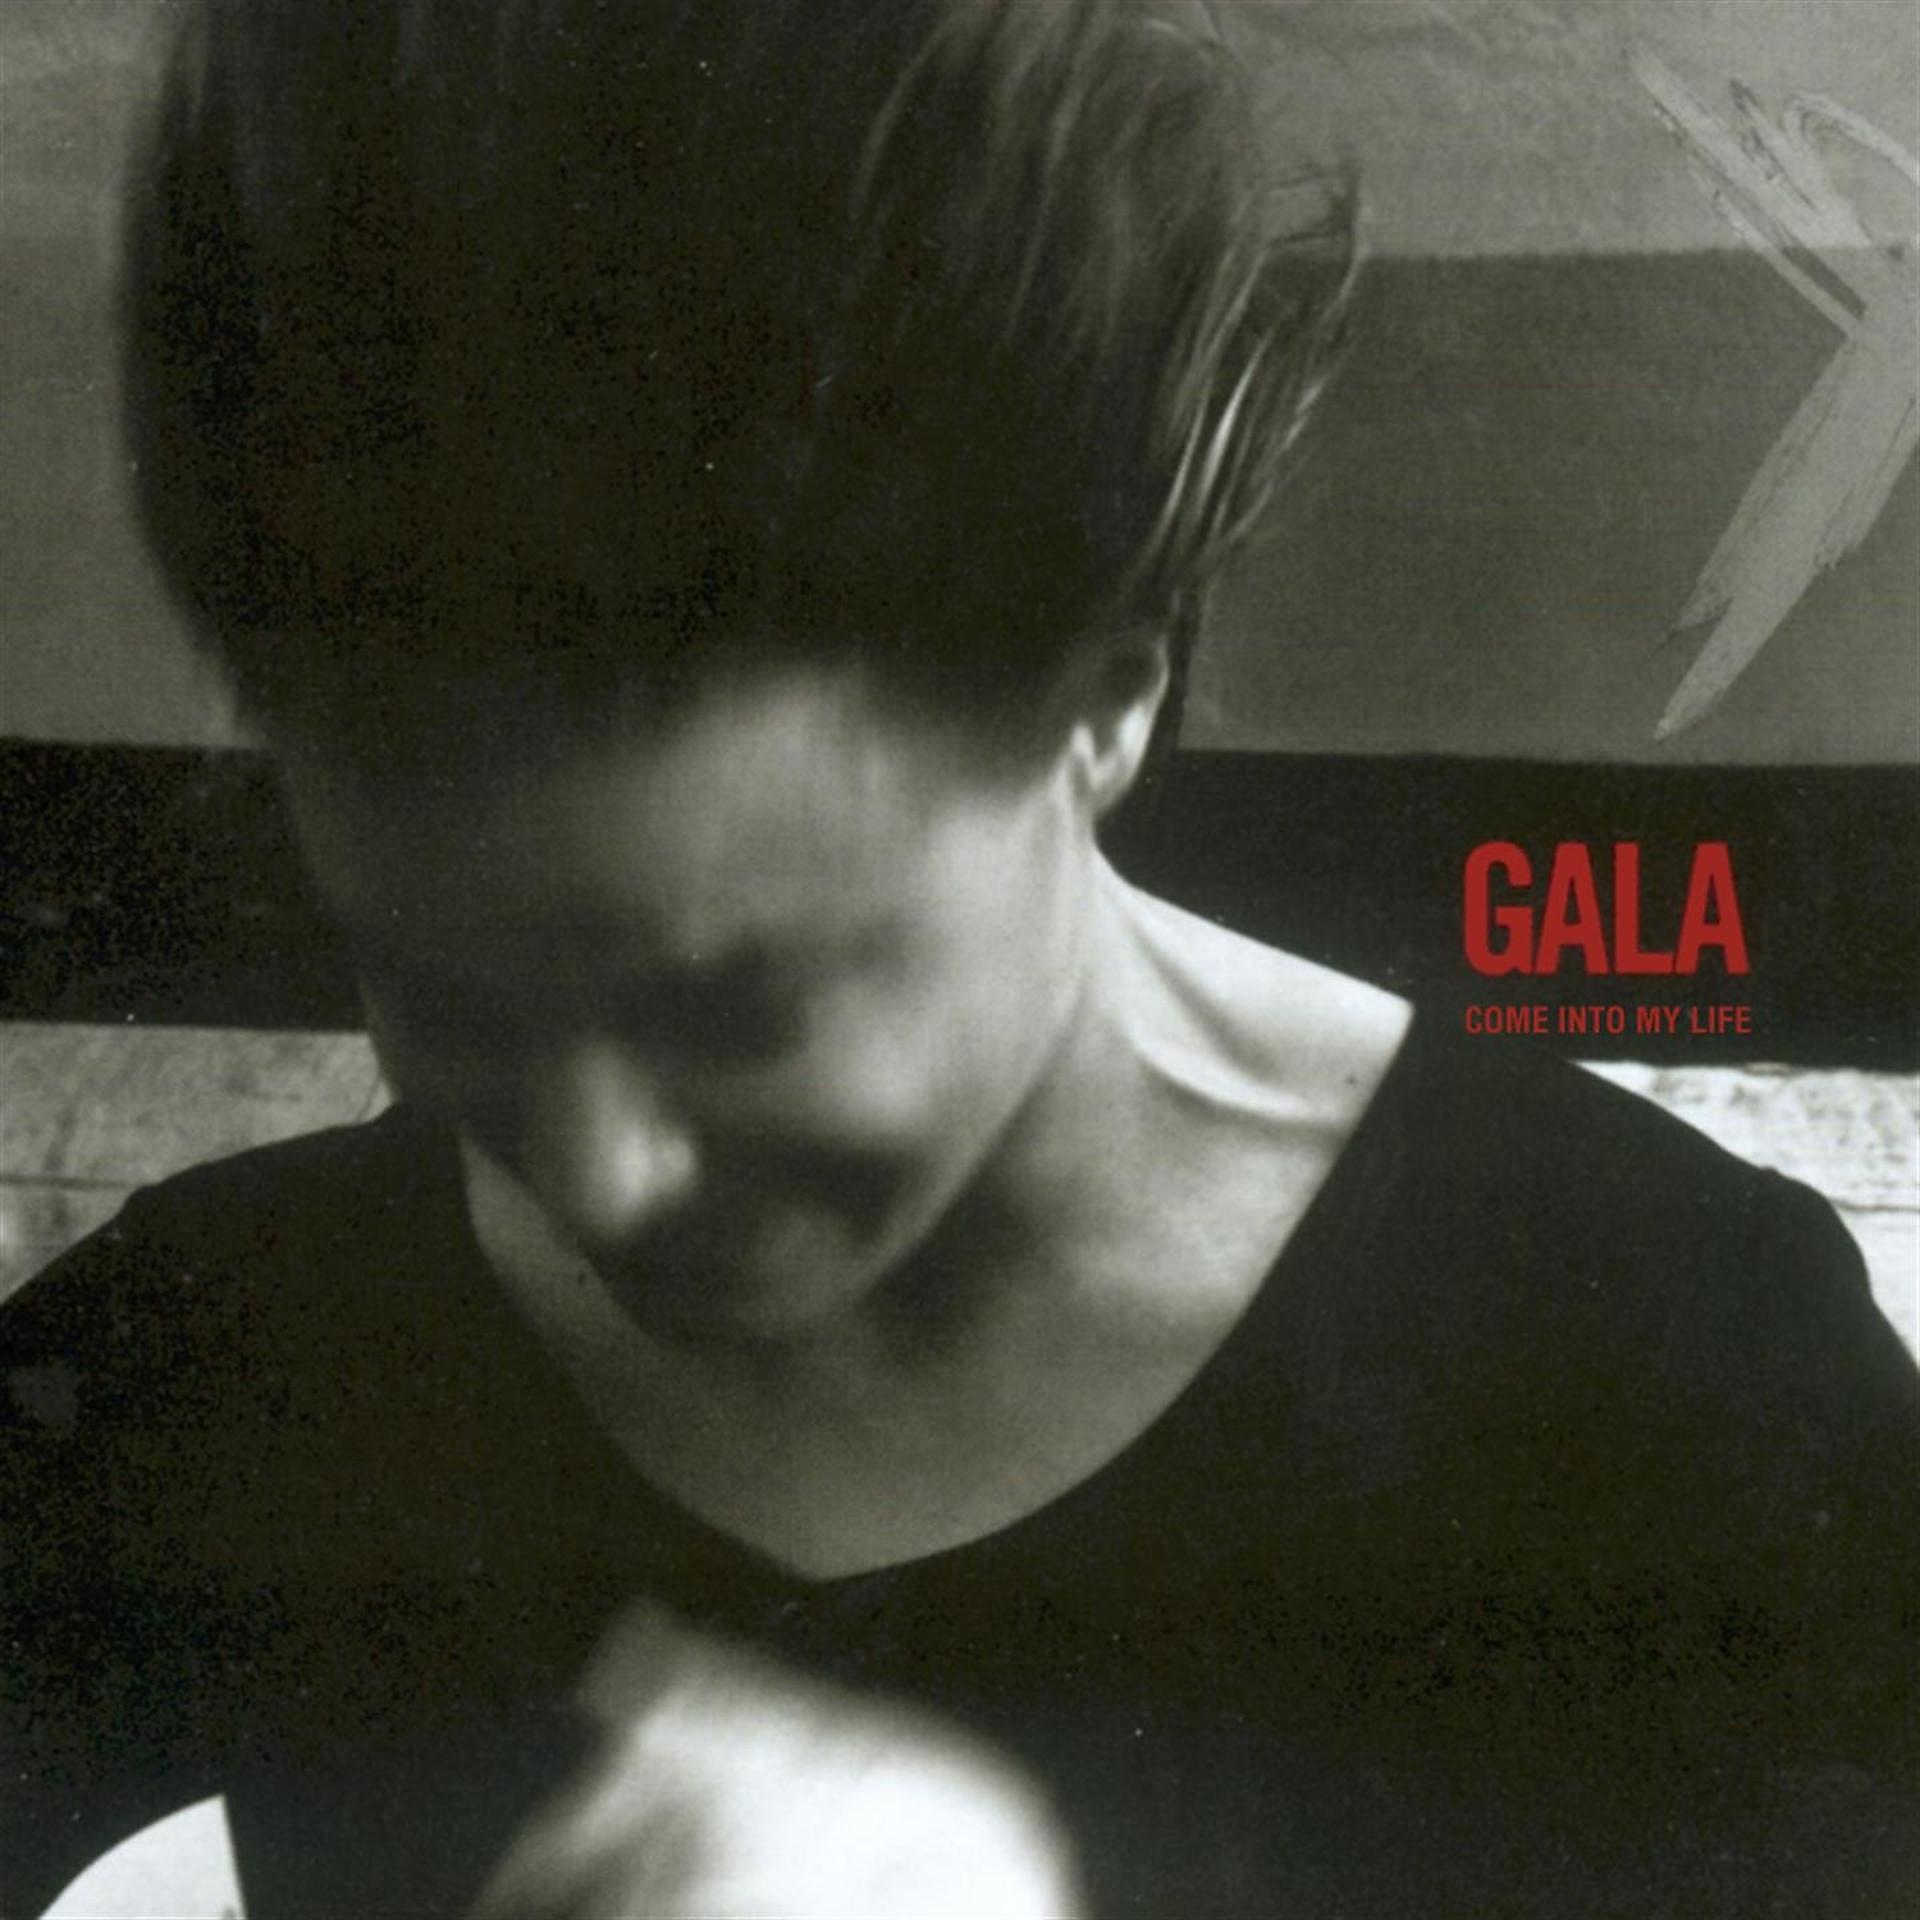 Let me life my life. Come into my Life Гала Риццато. Gala come into my Life 1998. Come into my Life (Gala album). Gala Molella.